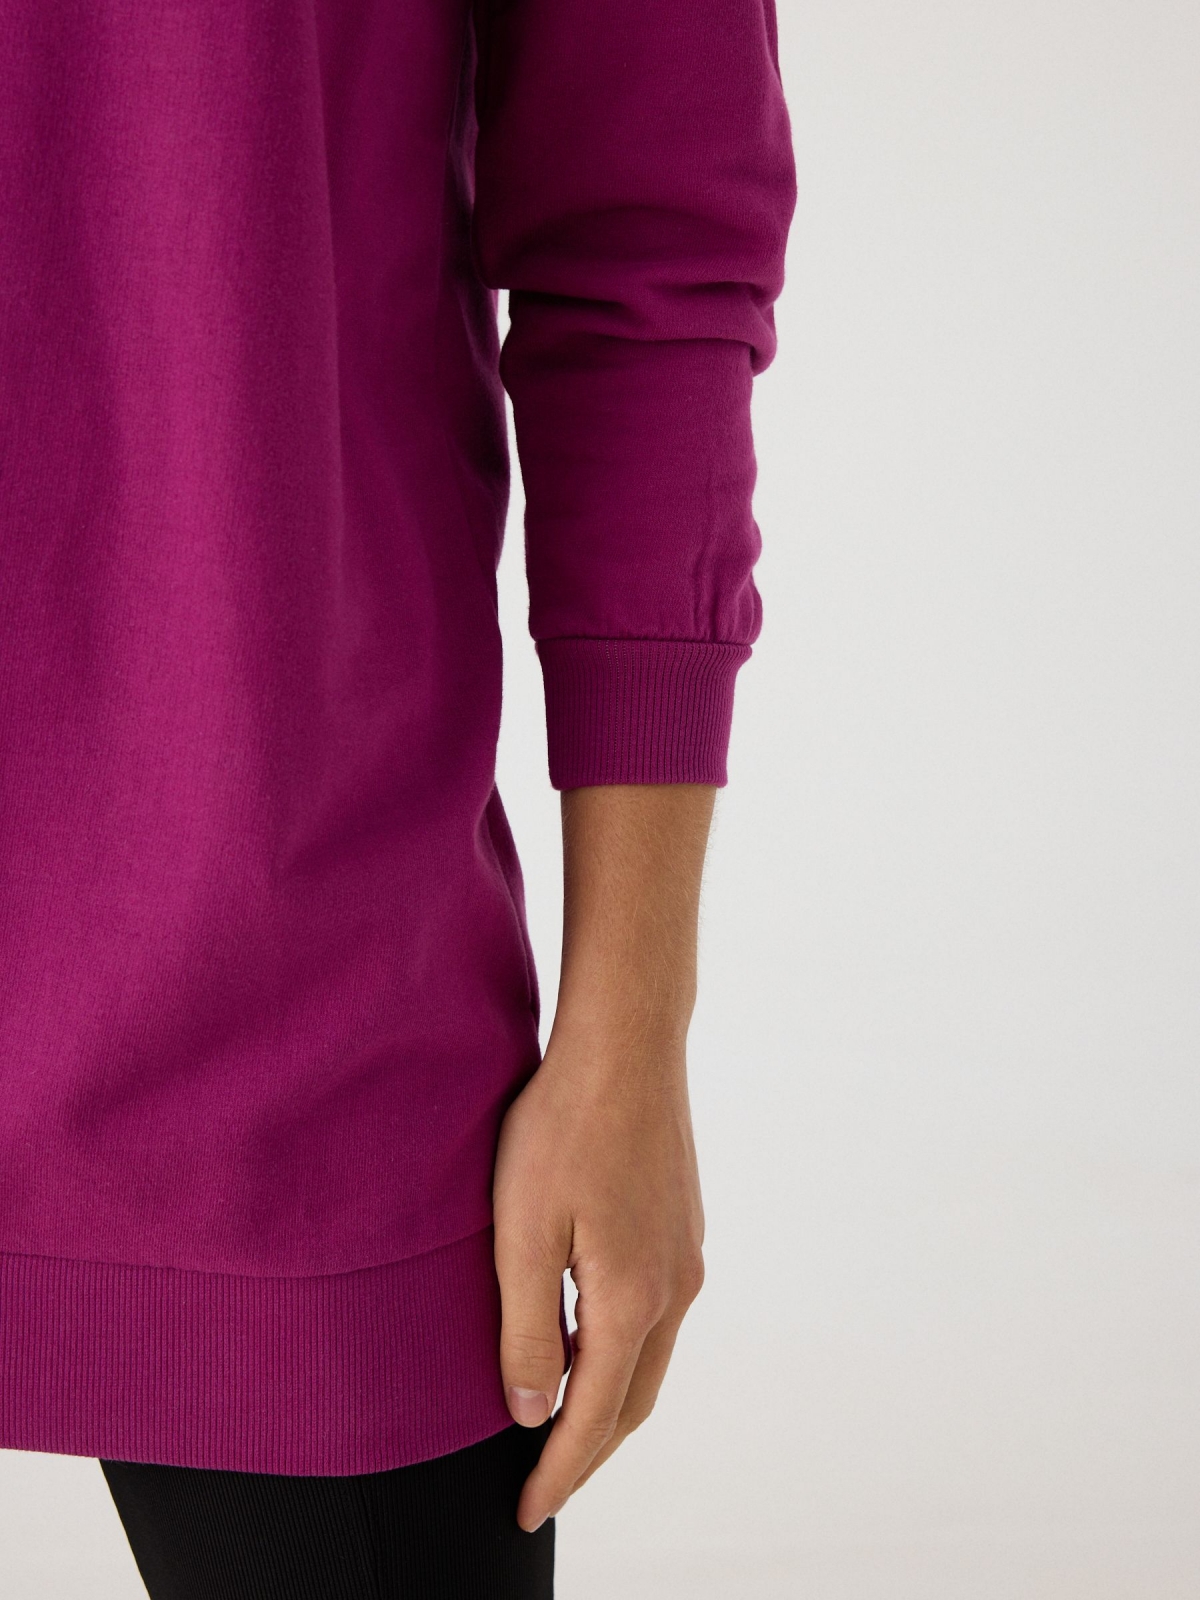 Sweatshirt oversized vestido fúcsia vista detalhe